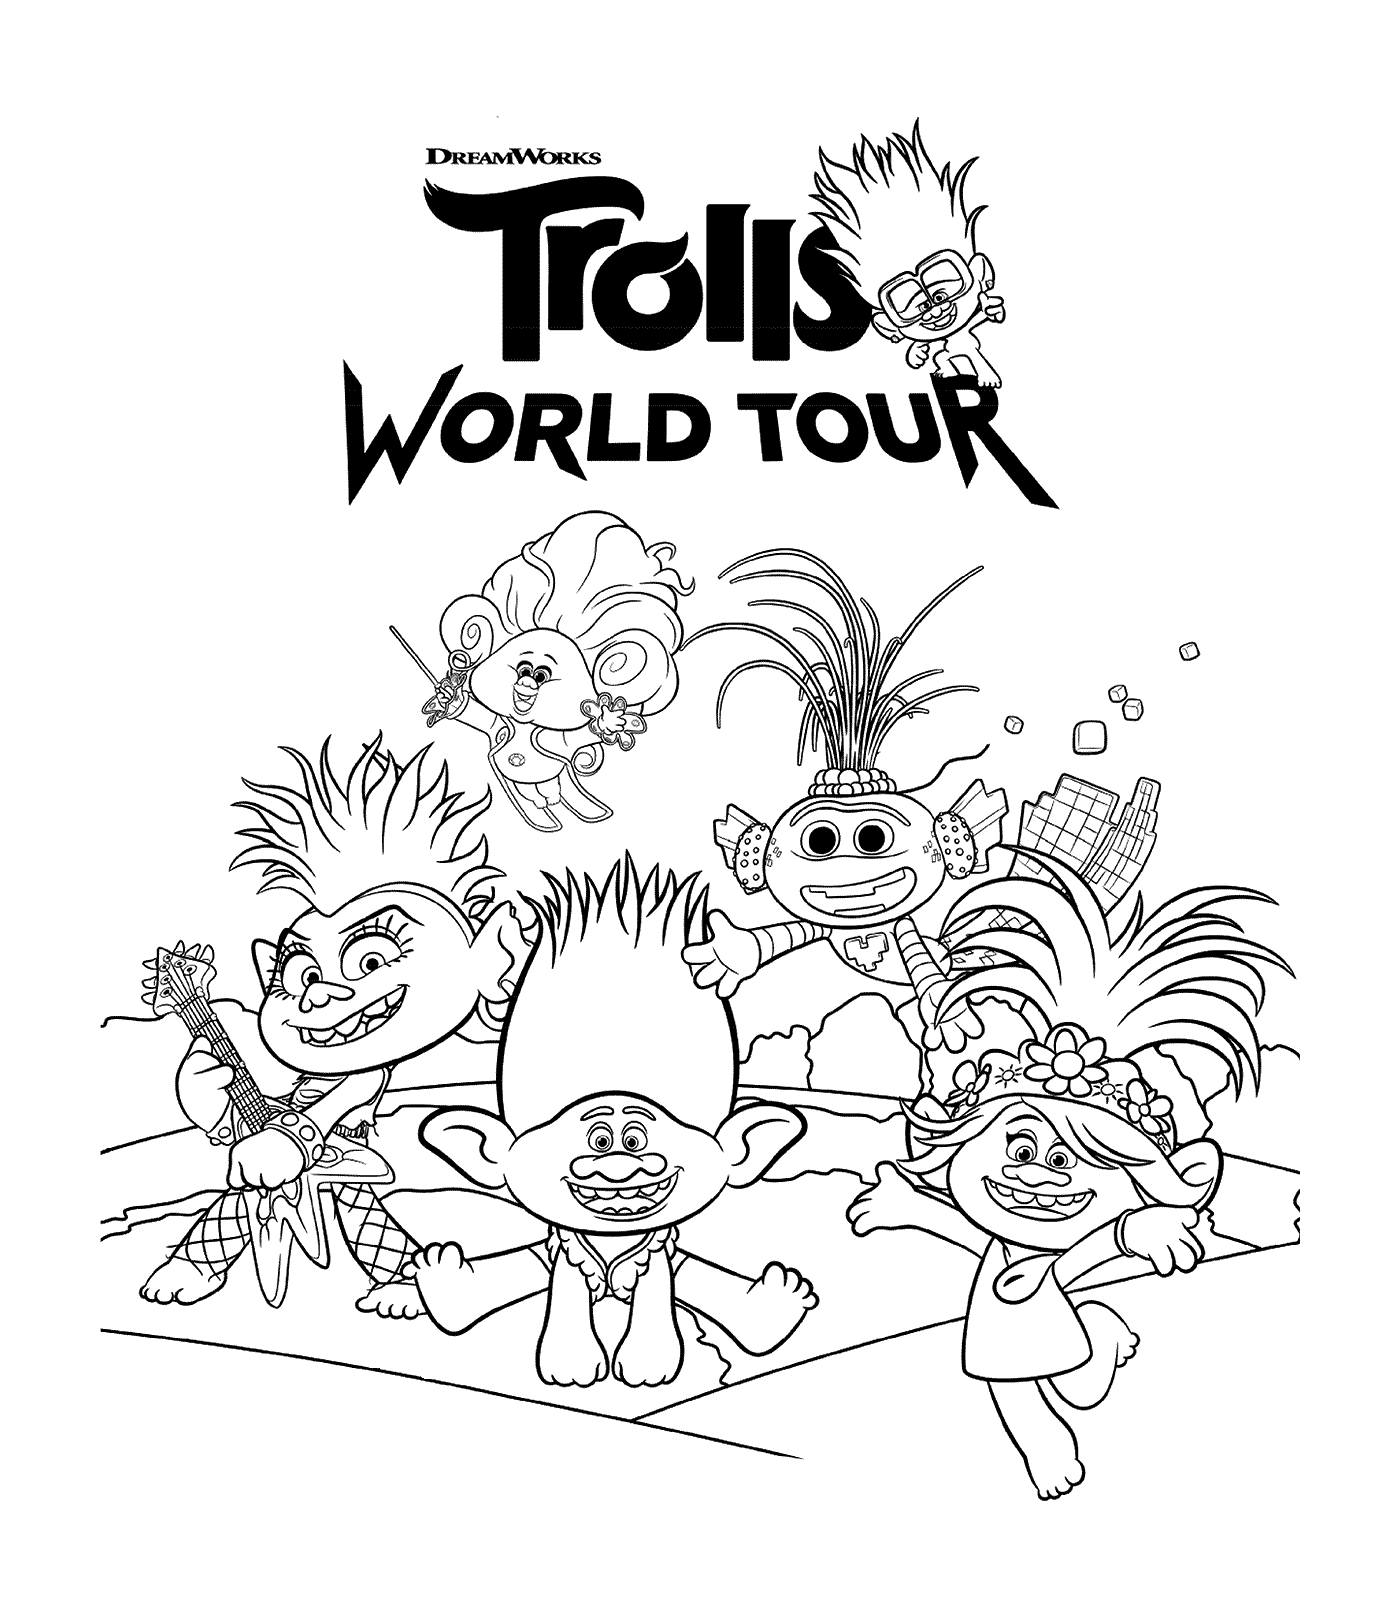   Troupe de trolls dans DreamWorks Trolls 2 World Tour 